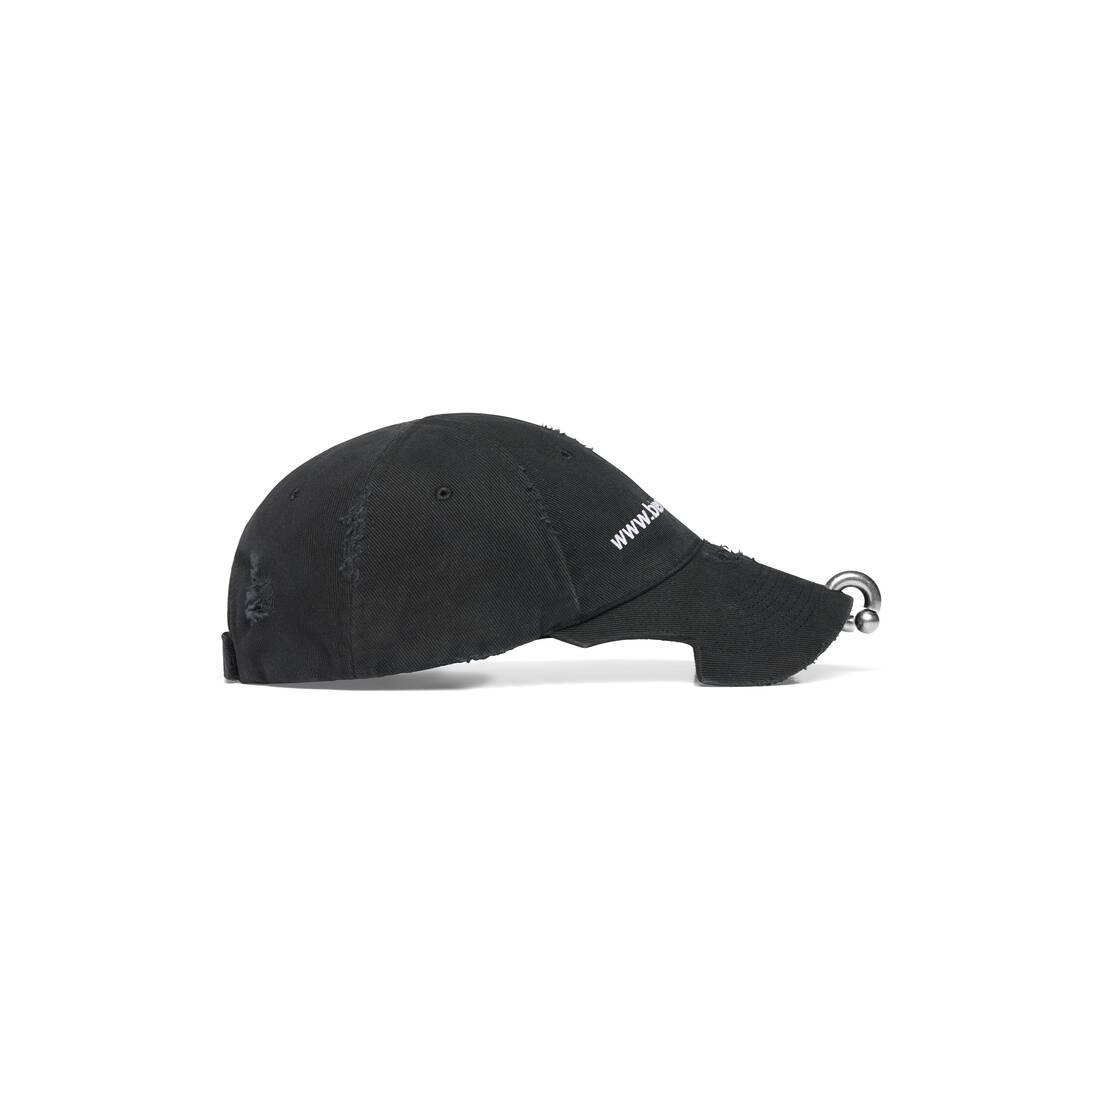 Bal.com Front Piercing Cap in Black Faded